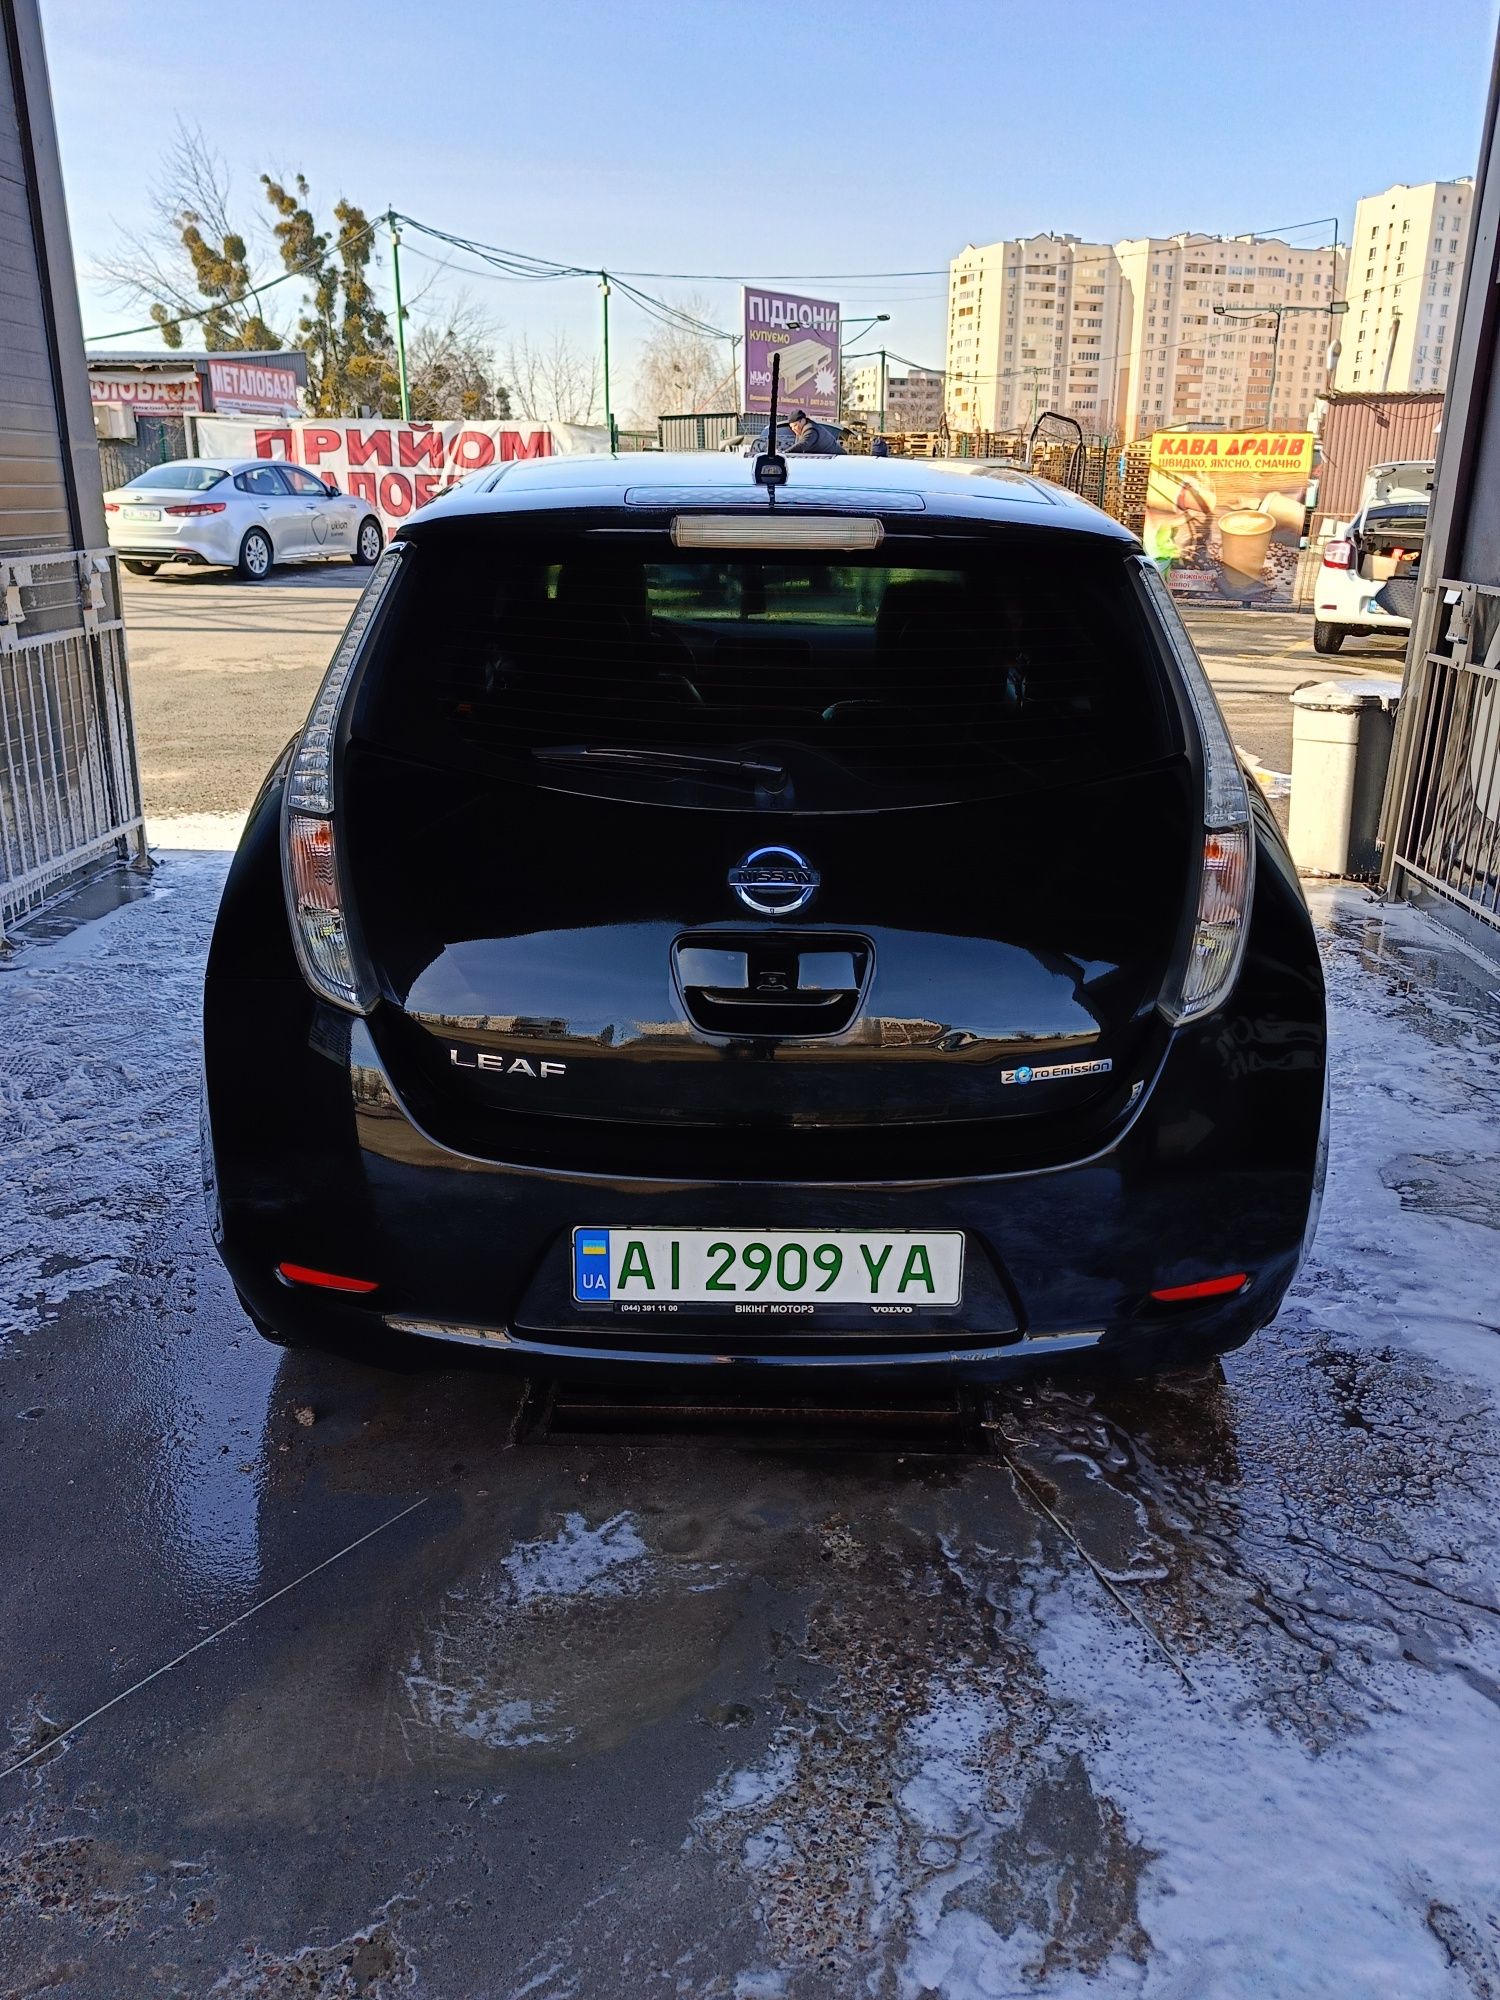 Продам Nissan leaf 2015 24 kw